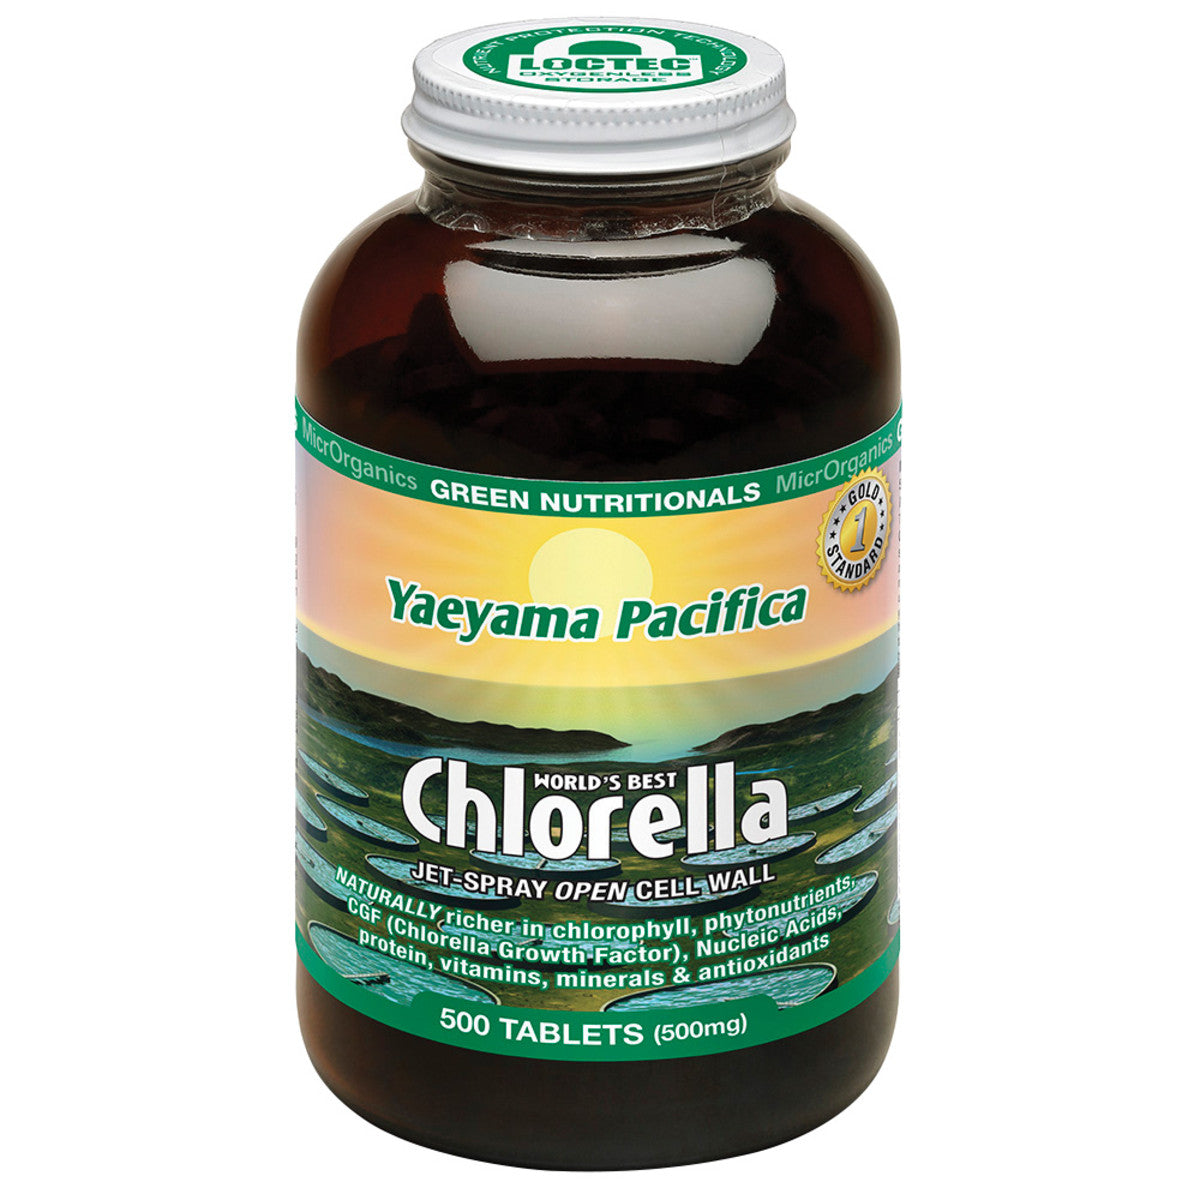 Green Nutritionals Yaeyama Pacifica Chlorella Tablets